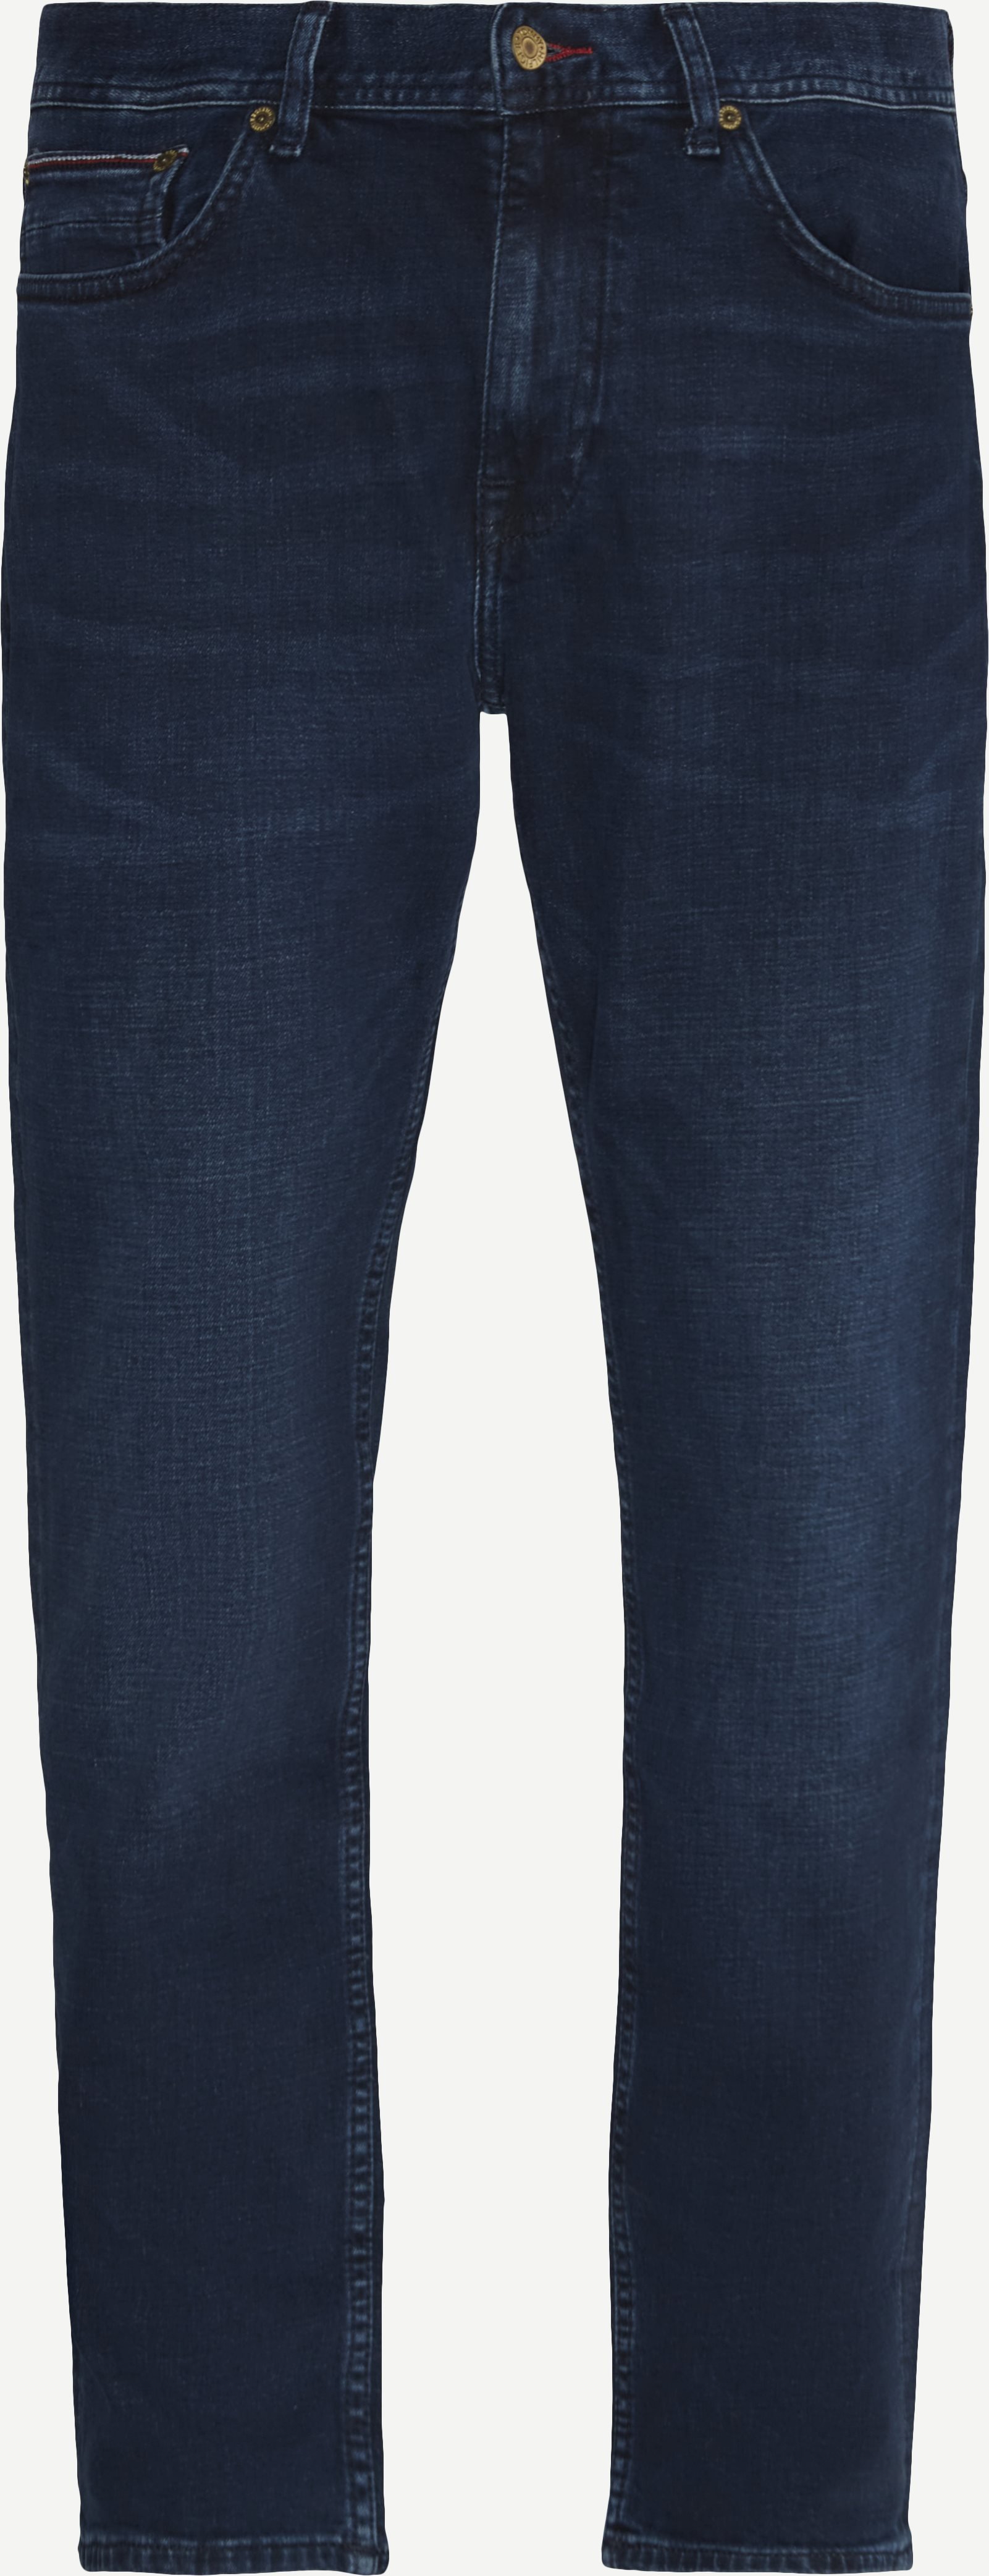 Denton jeans - Jeans - Straight fit - Denim